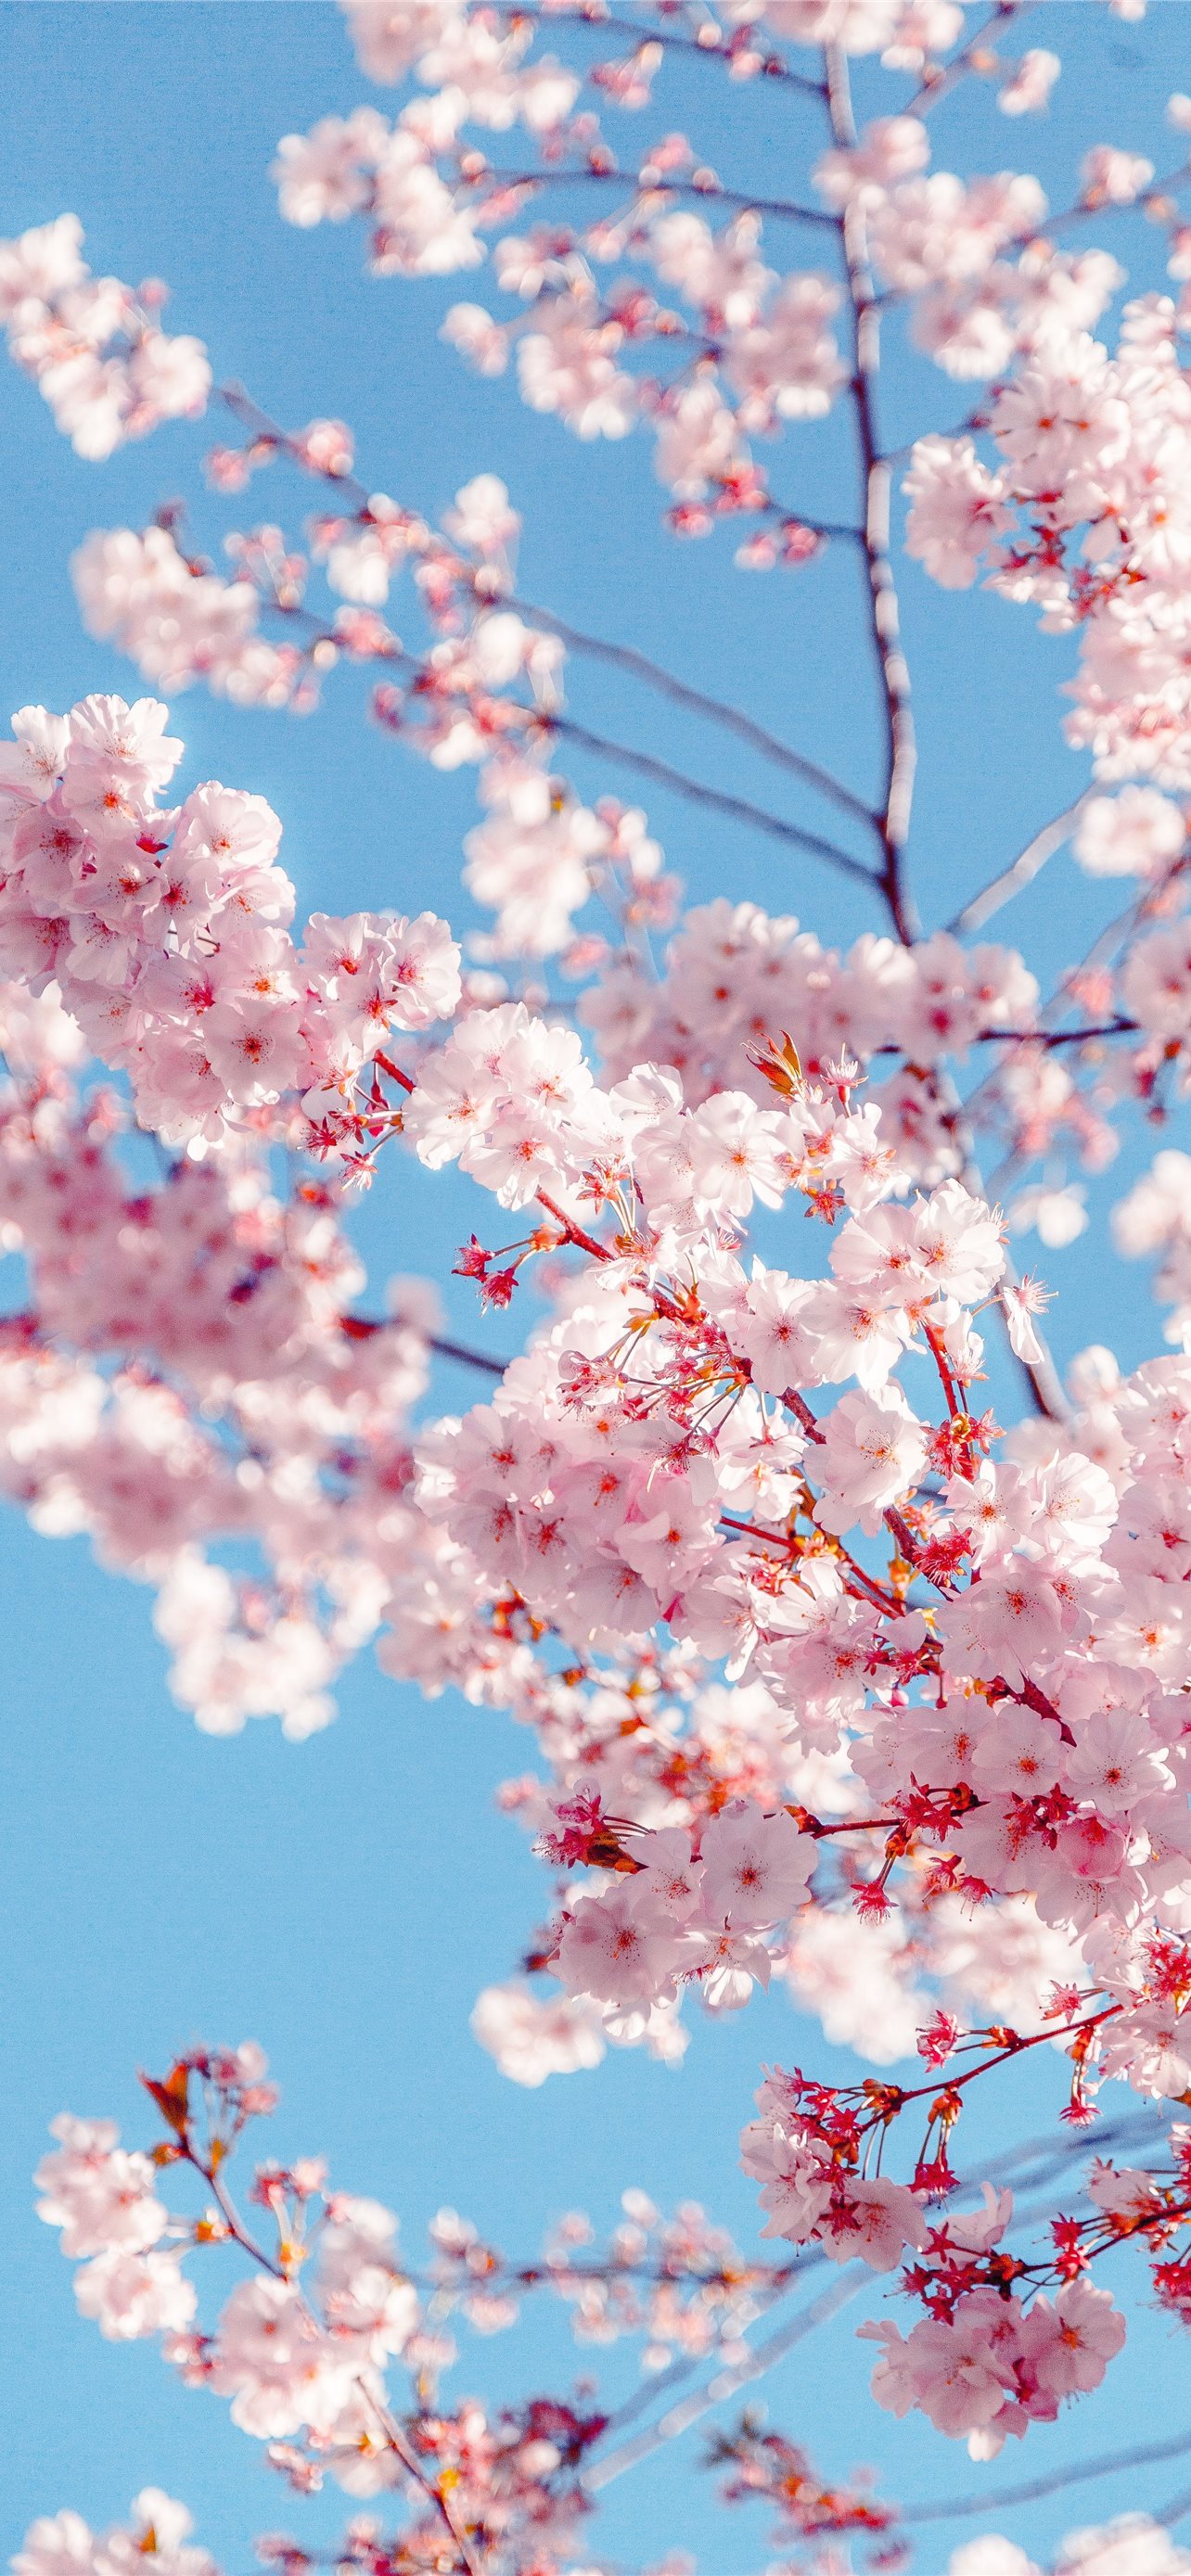 47 Cherry Blossoms iPhone Wallpaper  WallpaperSafari